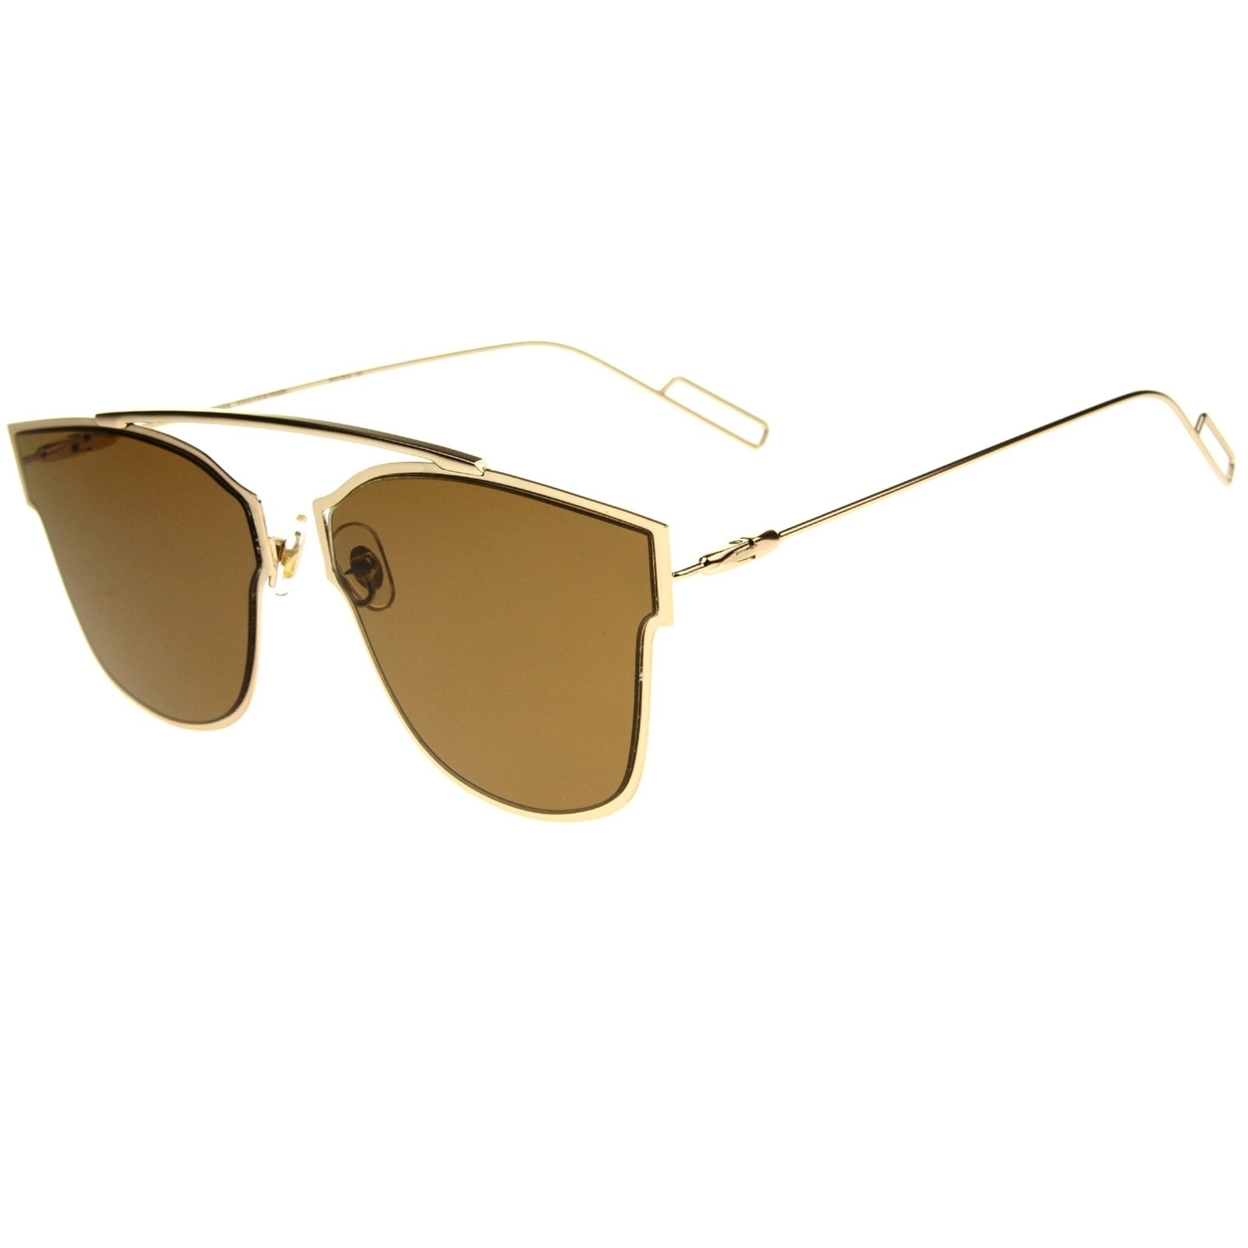 Modern Fashion Ultra Thin Open Metal Minimalist Pantos Aviator Sunglasses 55mm - Silver / Lavender